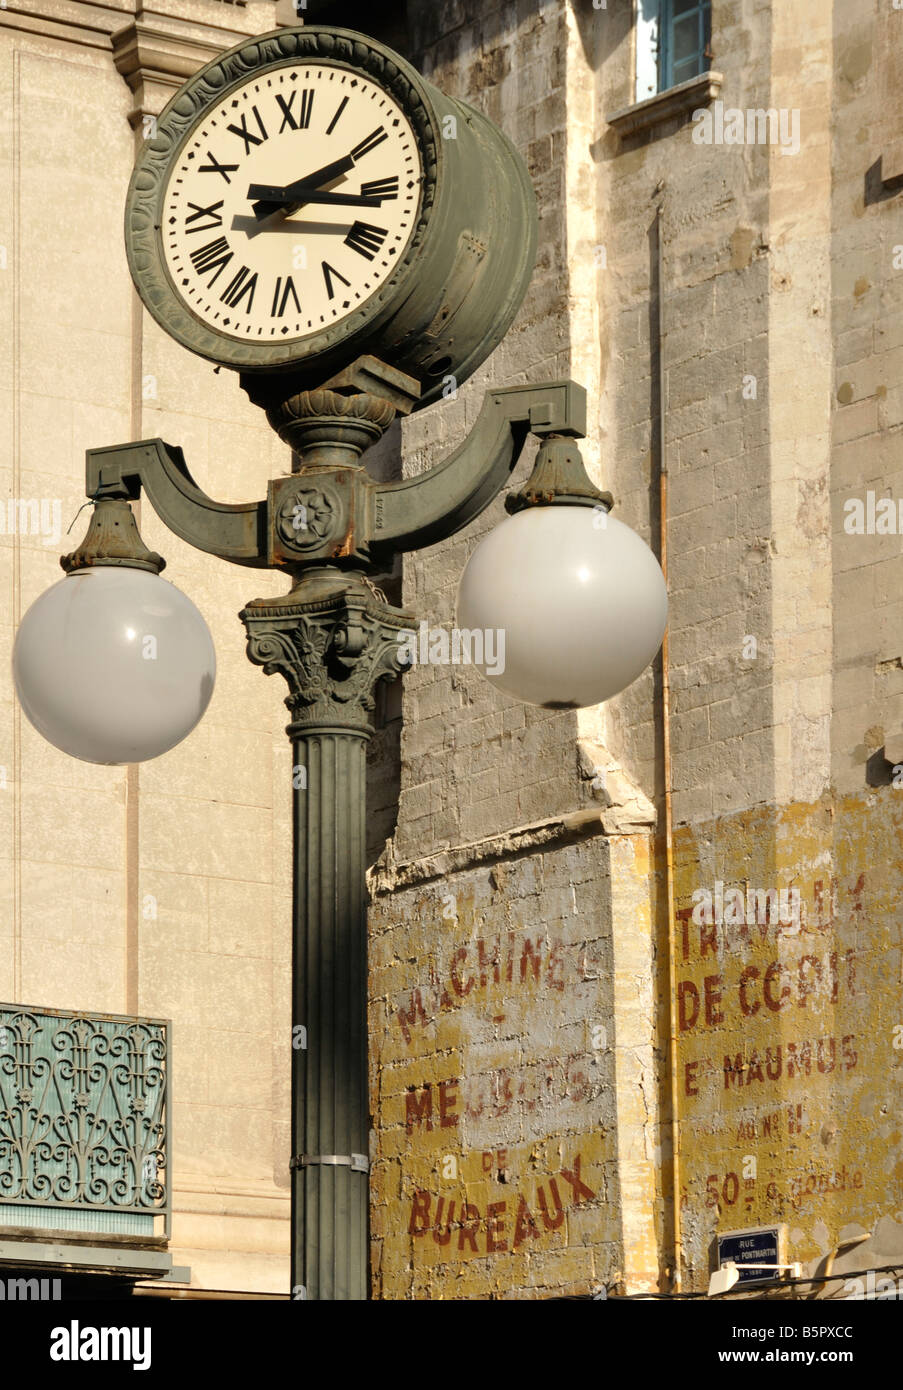 Clock and lampost Avignon France Stock Photo